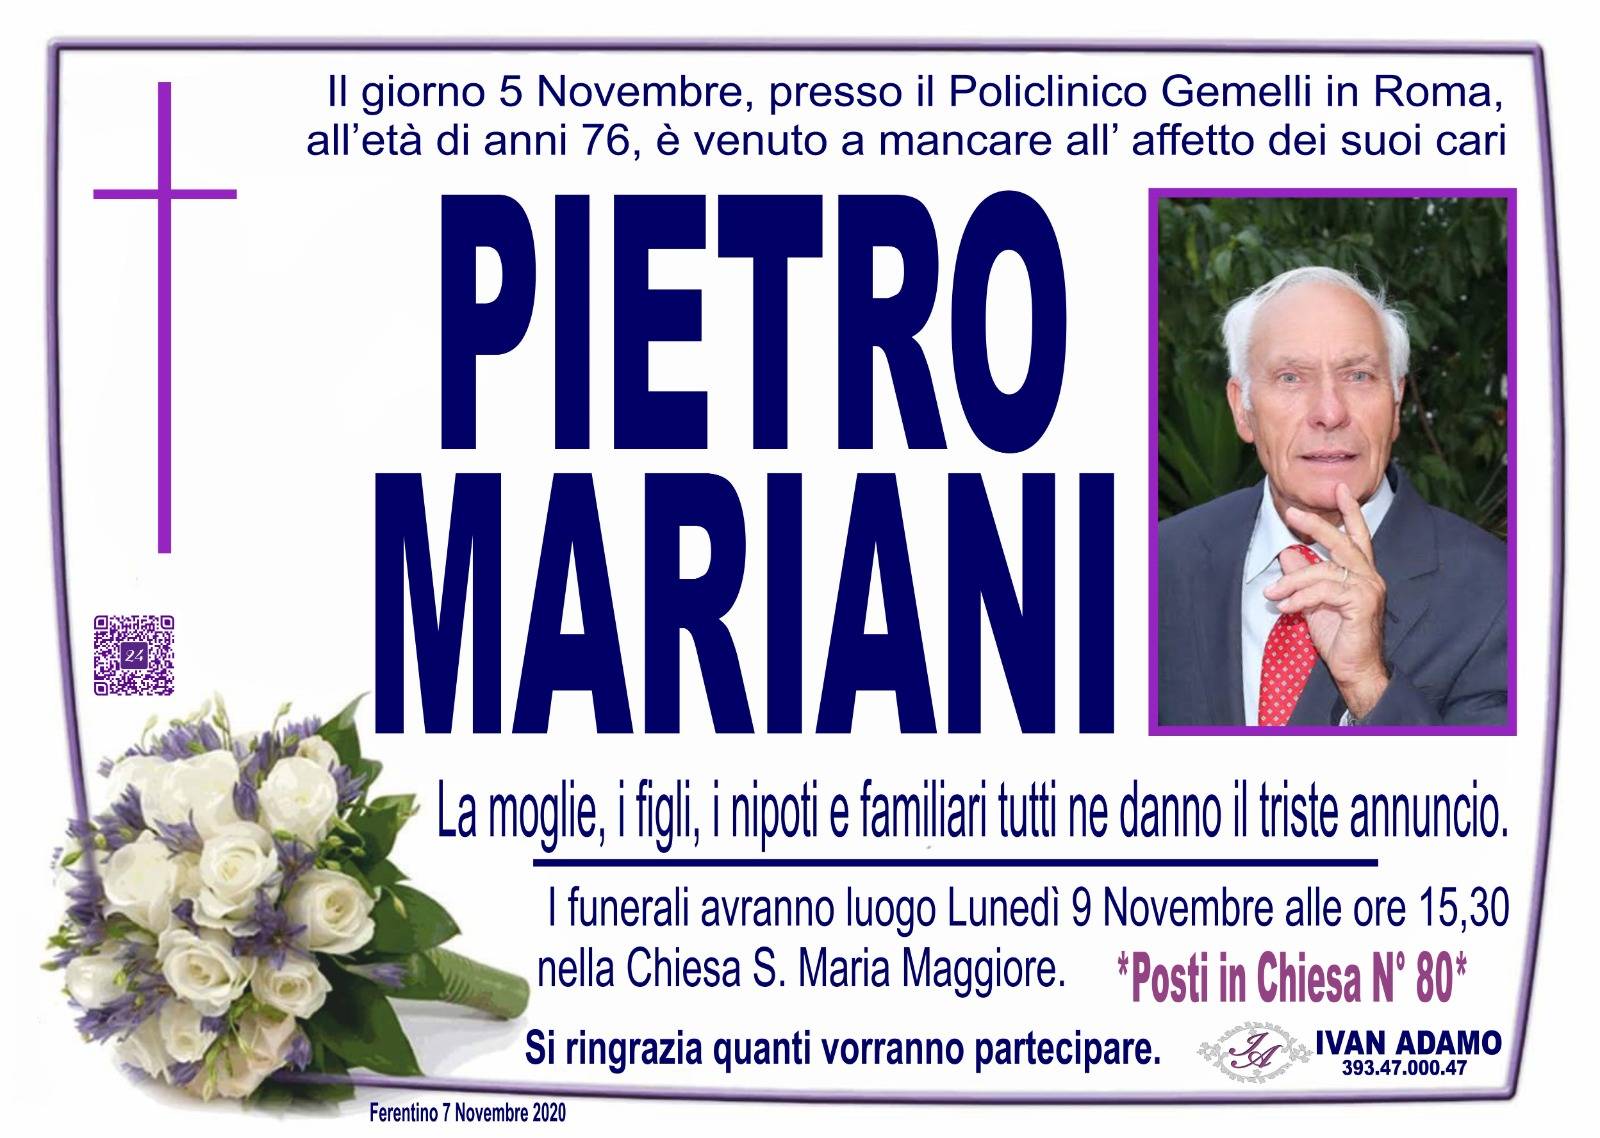 Pietro Mariani